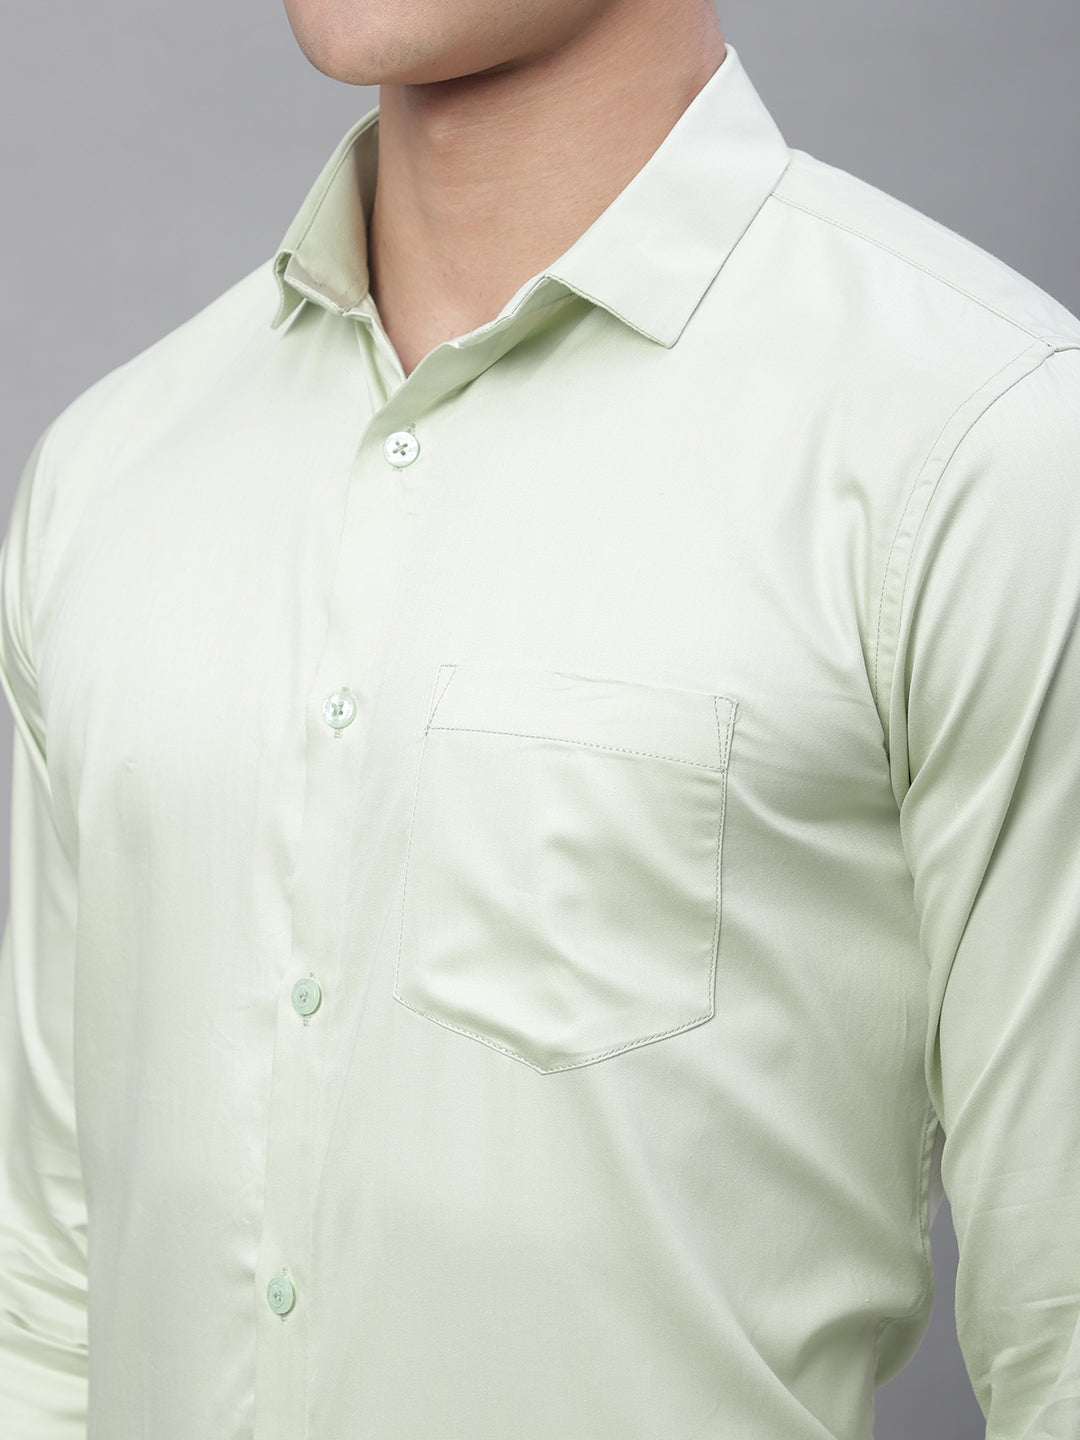 Paramount Pure Cotton Solid Shirt - Light Green